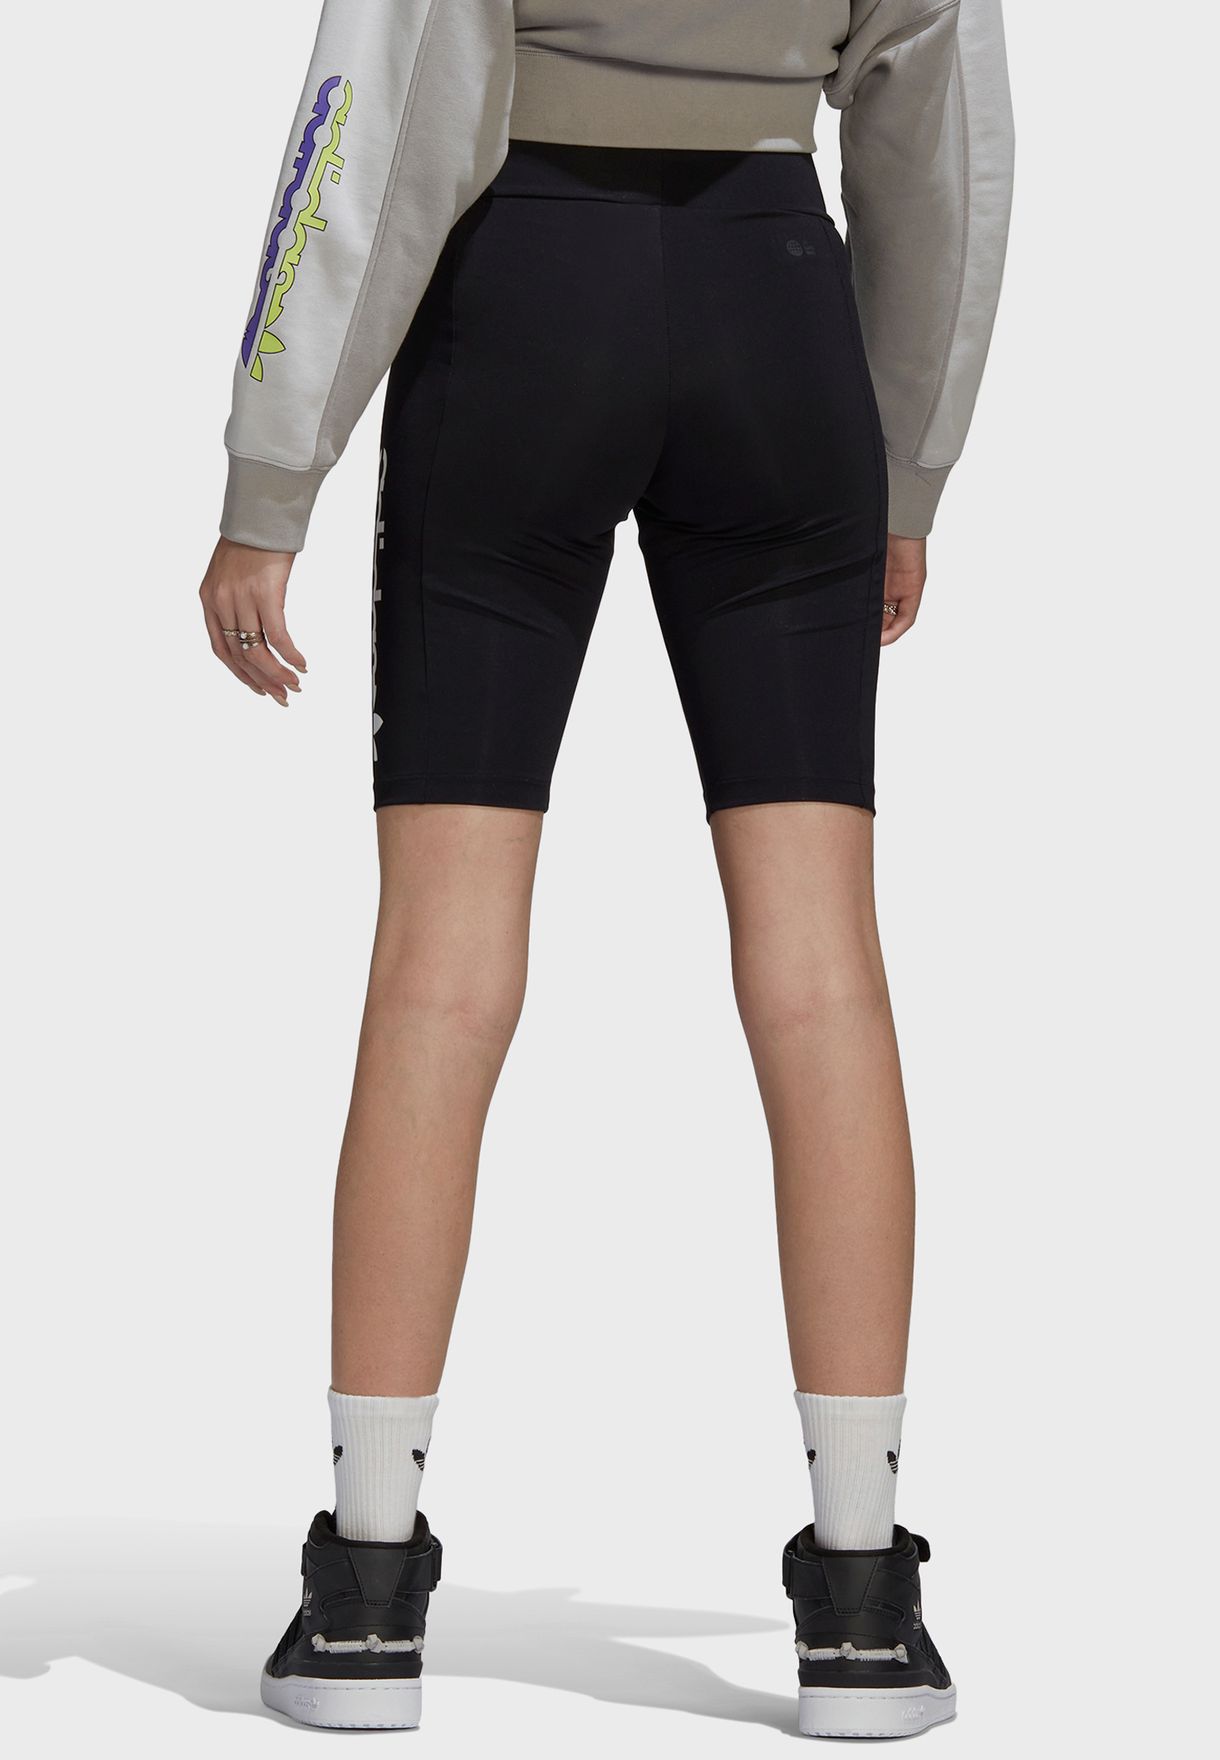 Trefoil Cycling Shorts